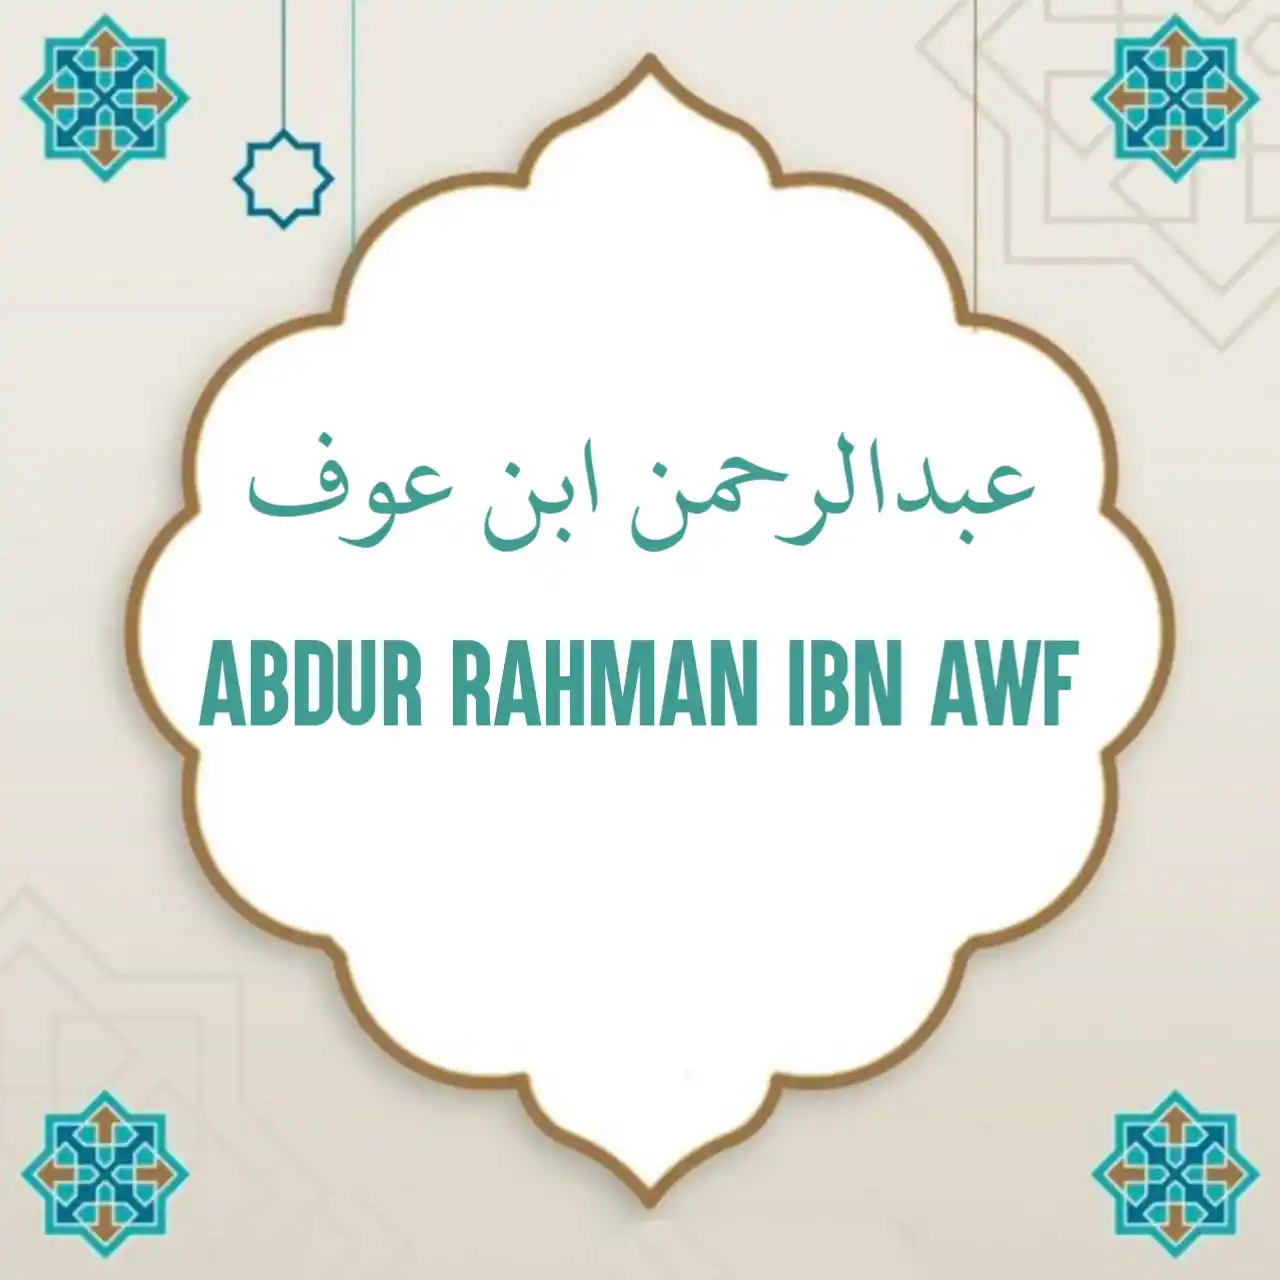 Abdur Rahman Bin Awf